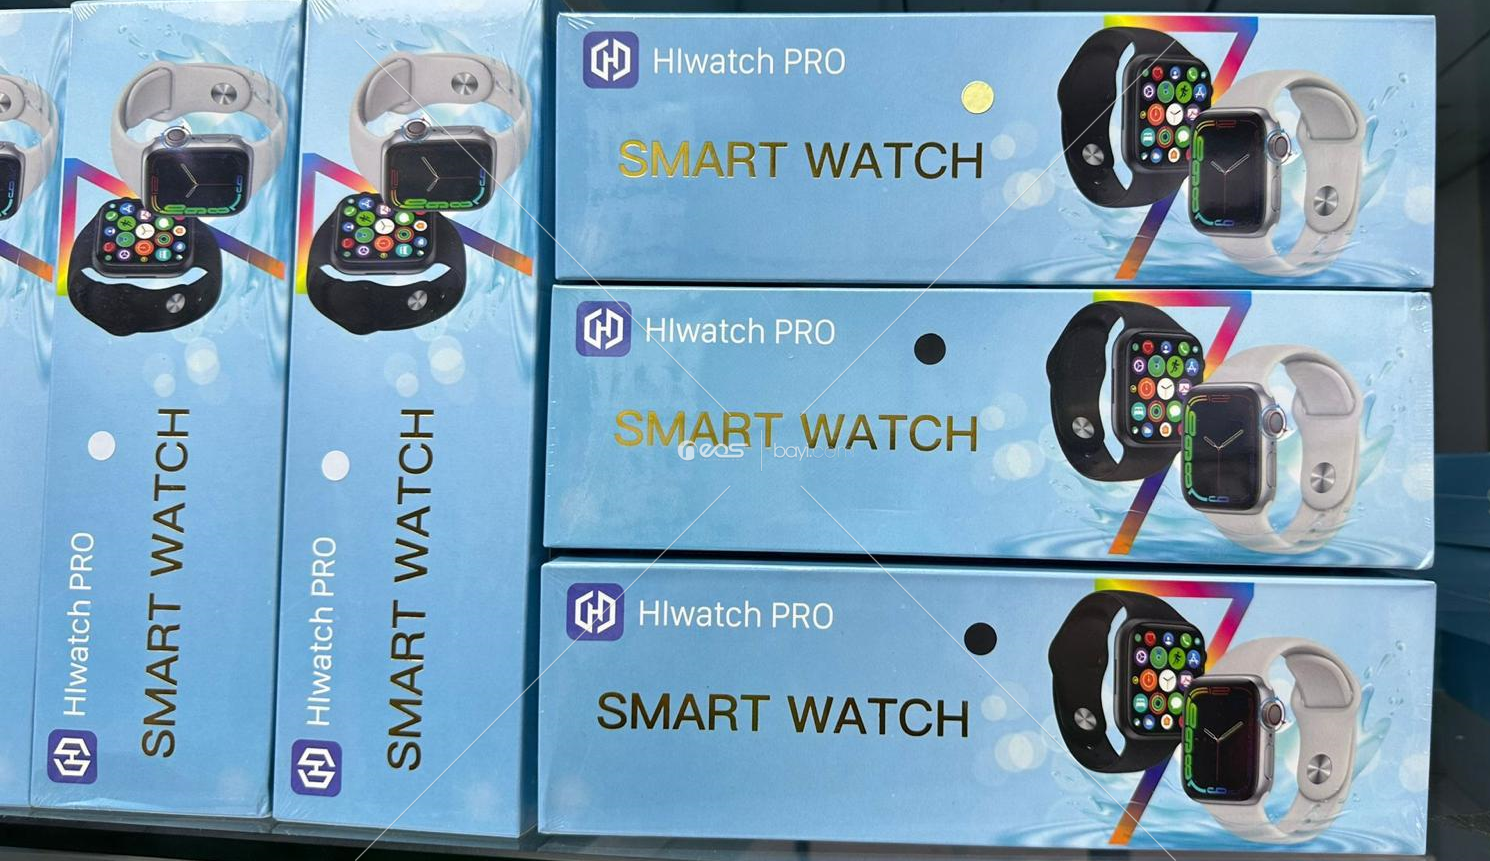 Hlwatch PRO Smart Watch